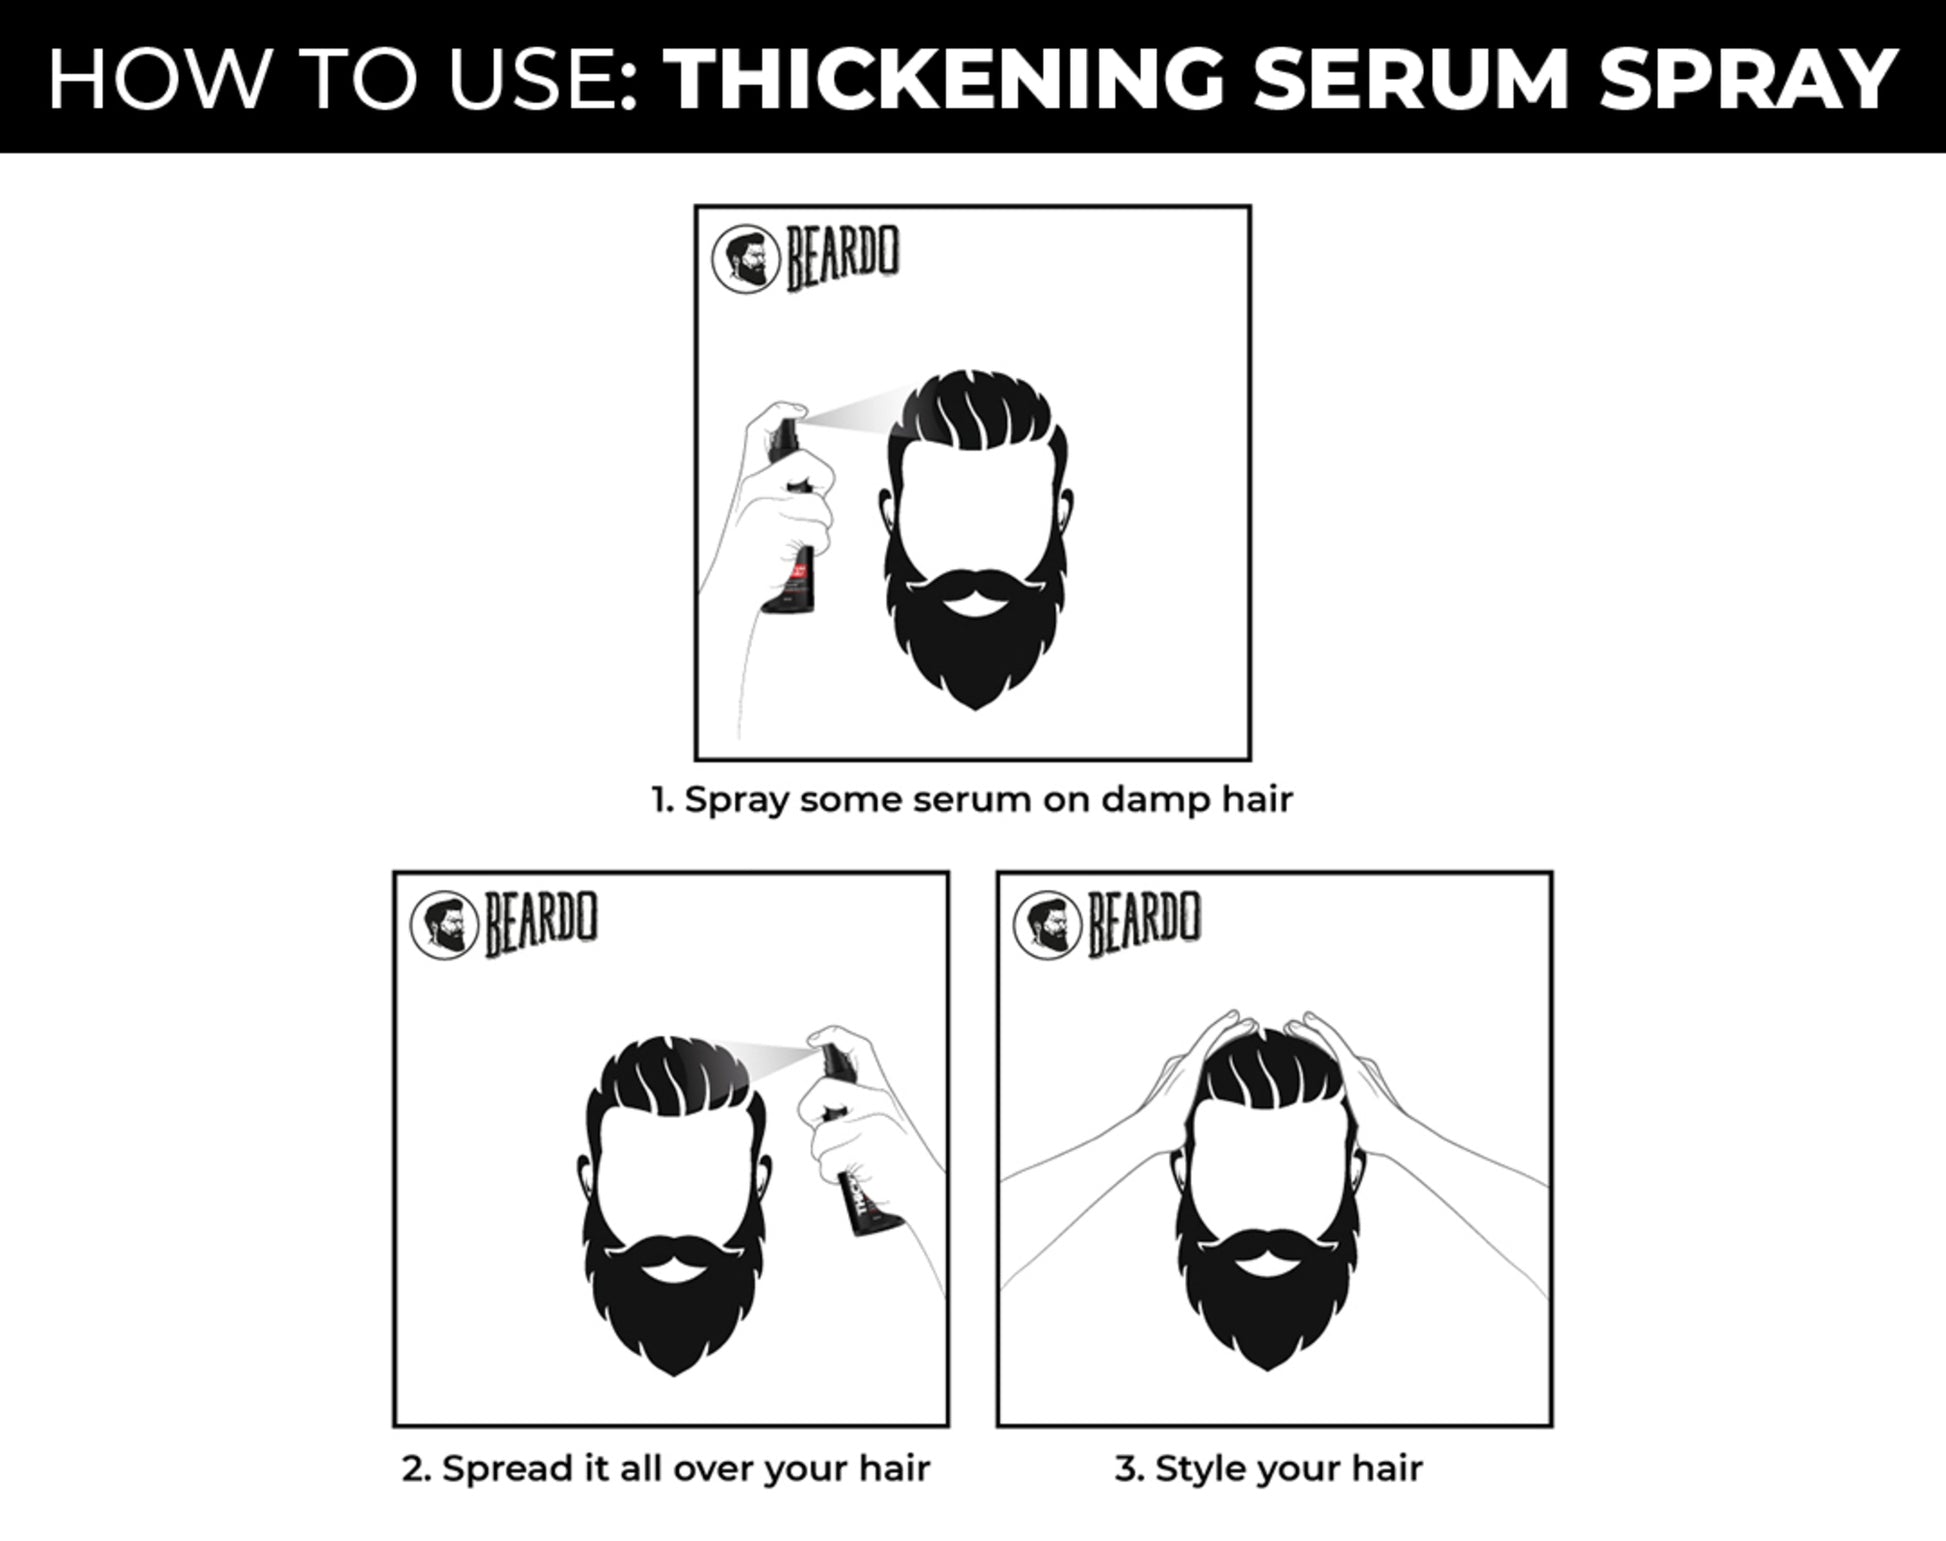 How do you use Beardo thickening serum?